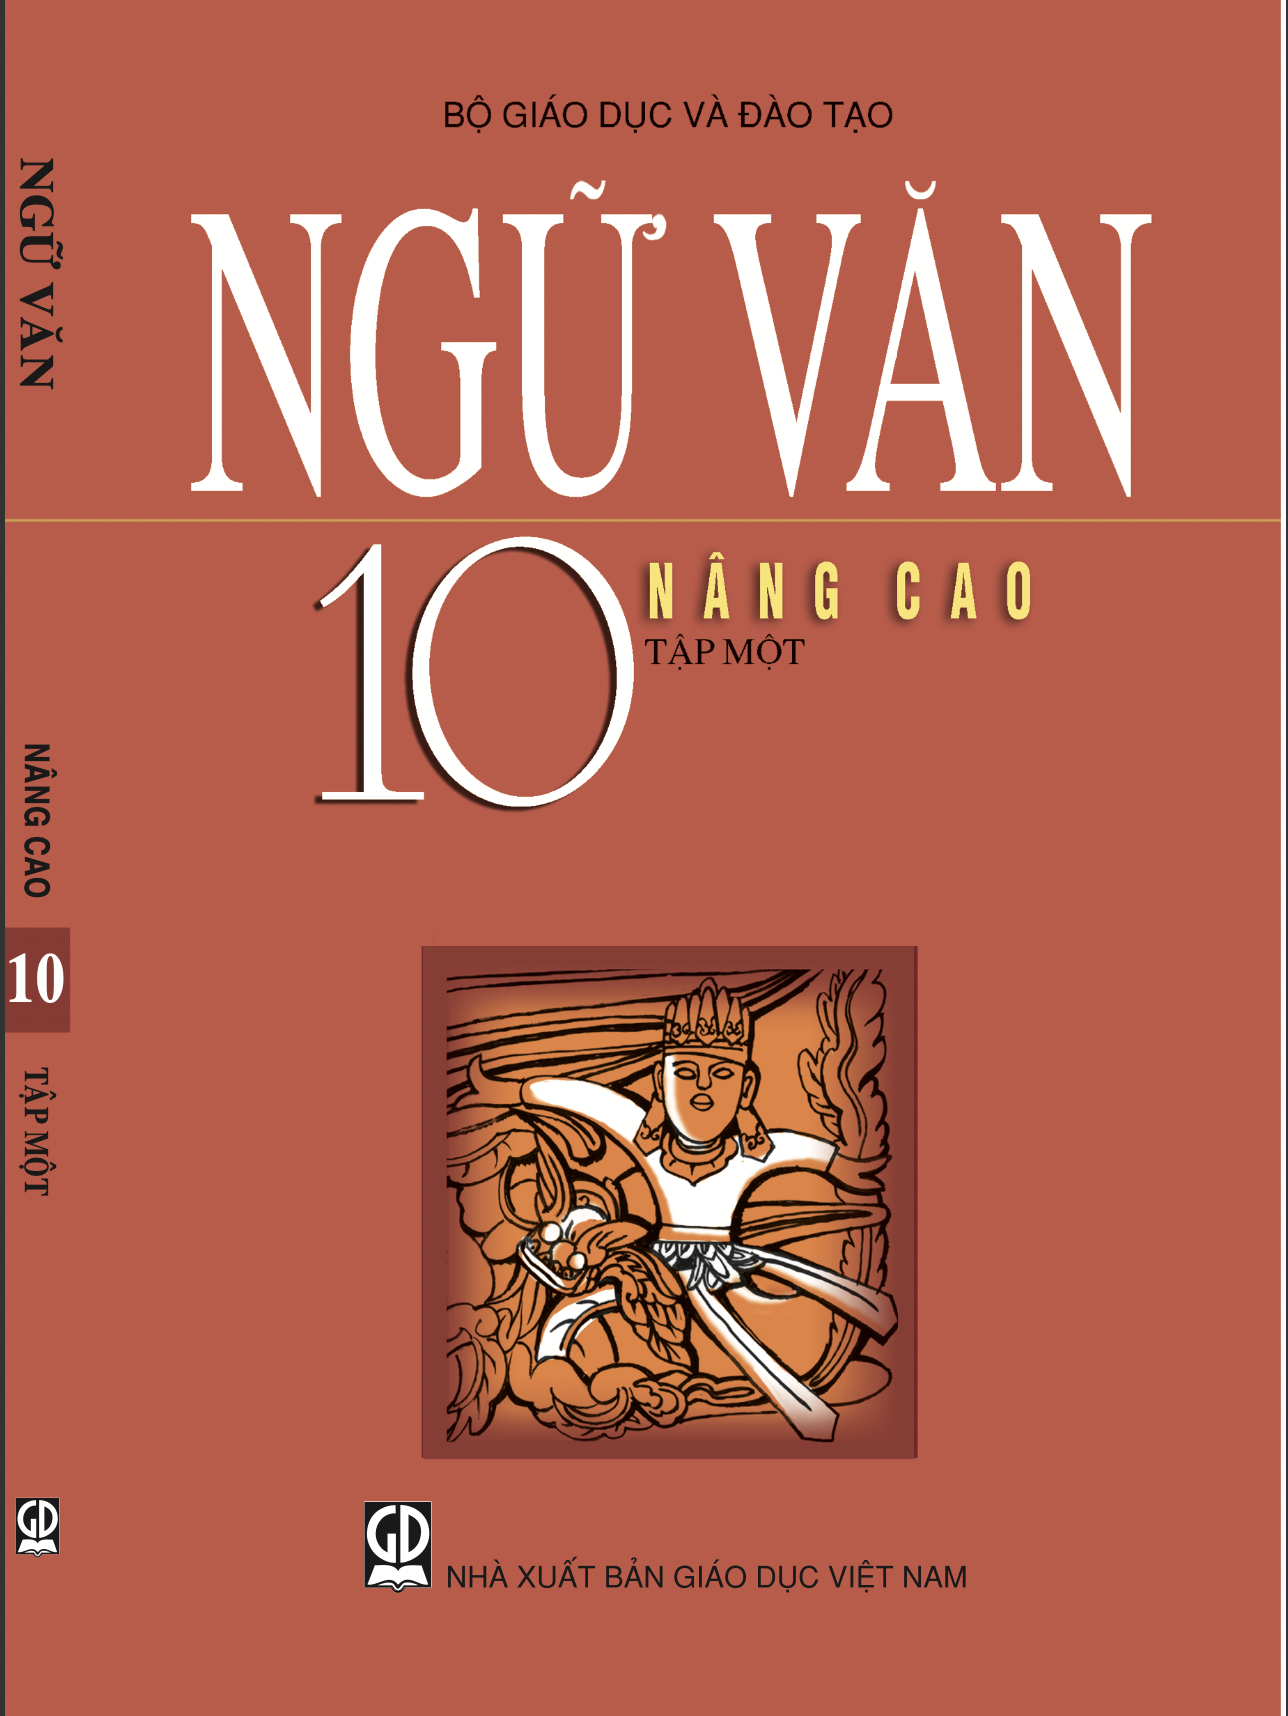 ngu-van-nang-cao-tap-1-806